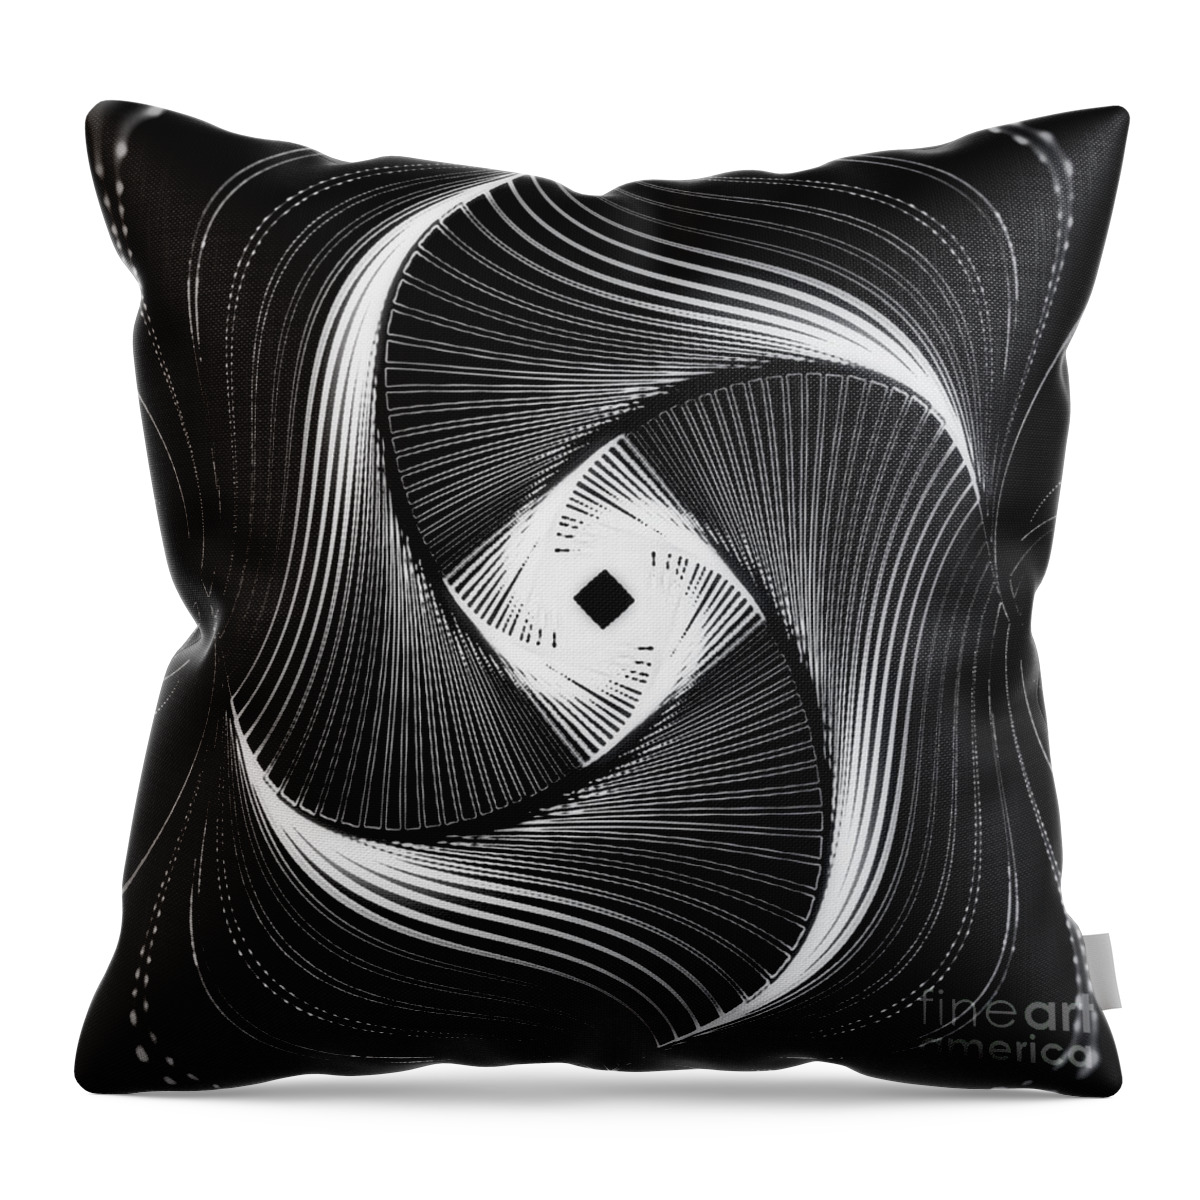 Spin Throw Pillow featuring the digital art Crazy Spin Verrueckte Drehung A by Eva-Maria Di Bella